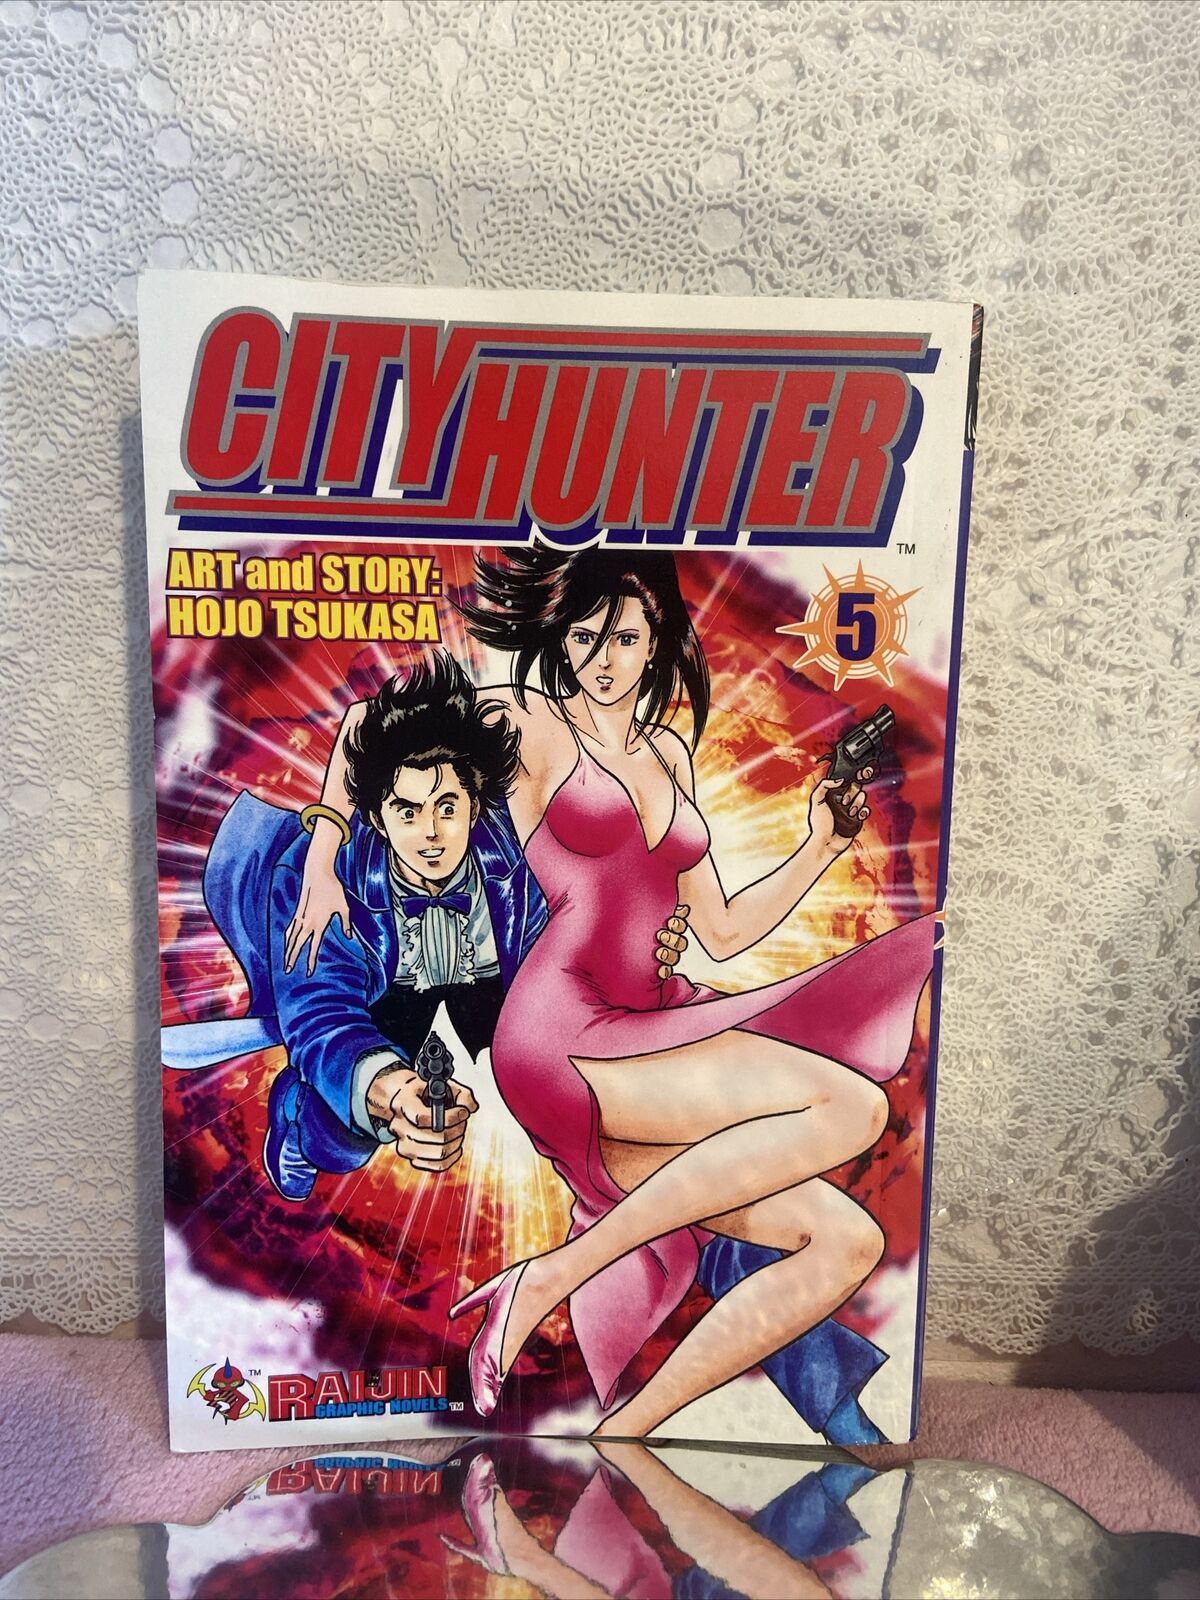 City Hunter Manga Graphic Novel Vol 5 English Action Raijin by Hojo Tsukasa